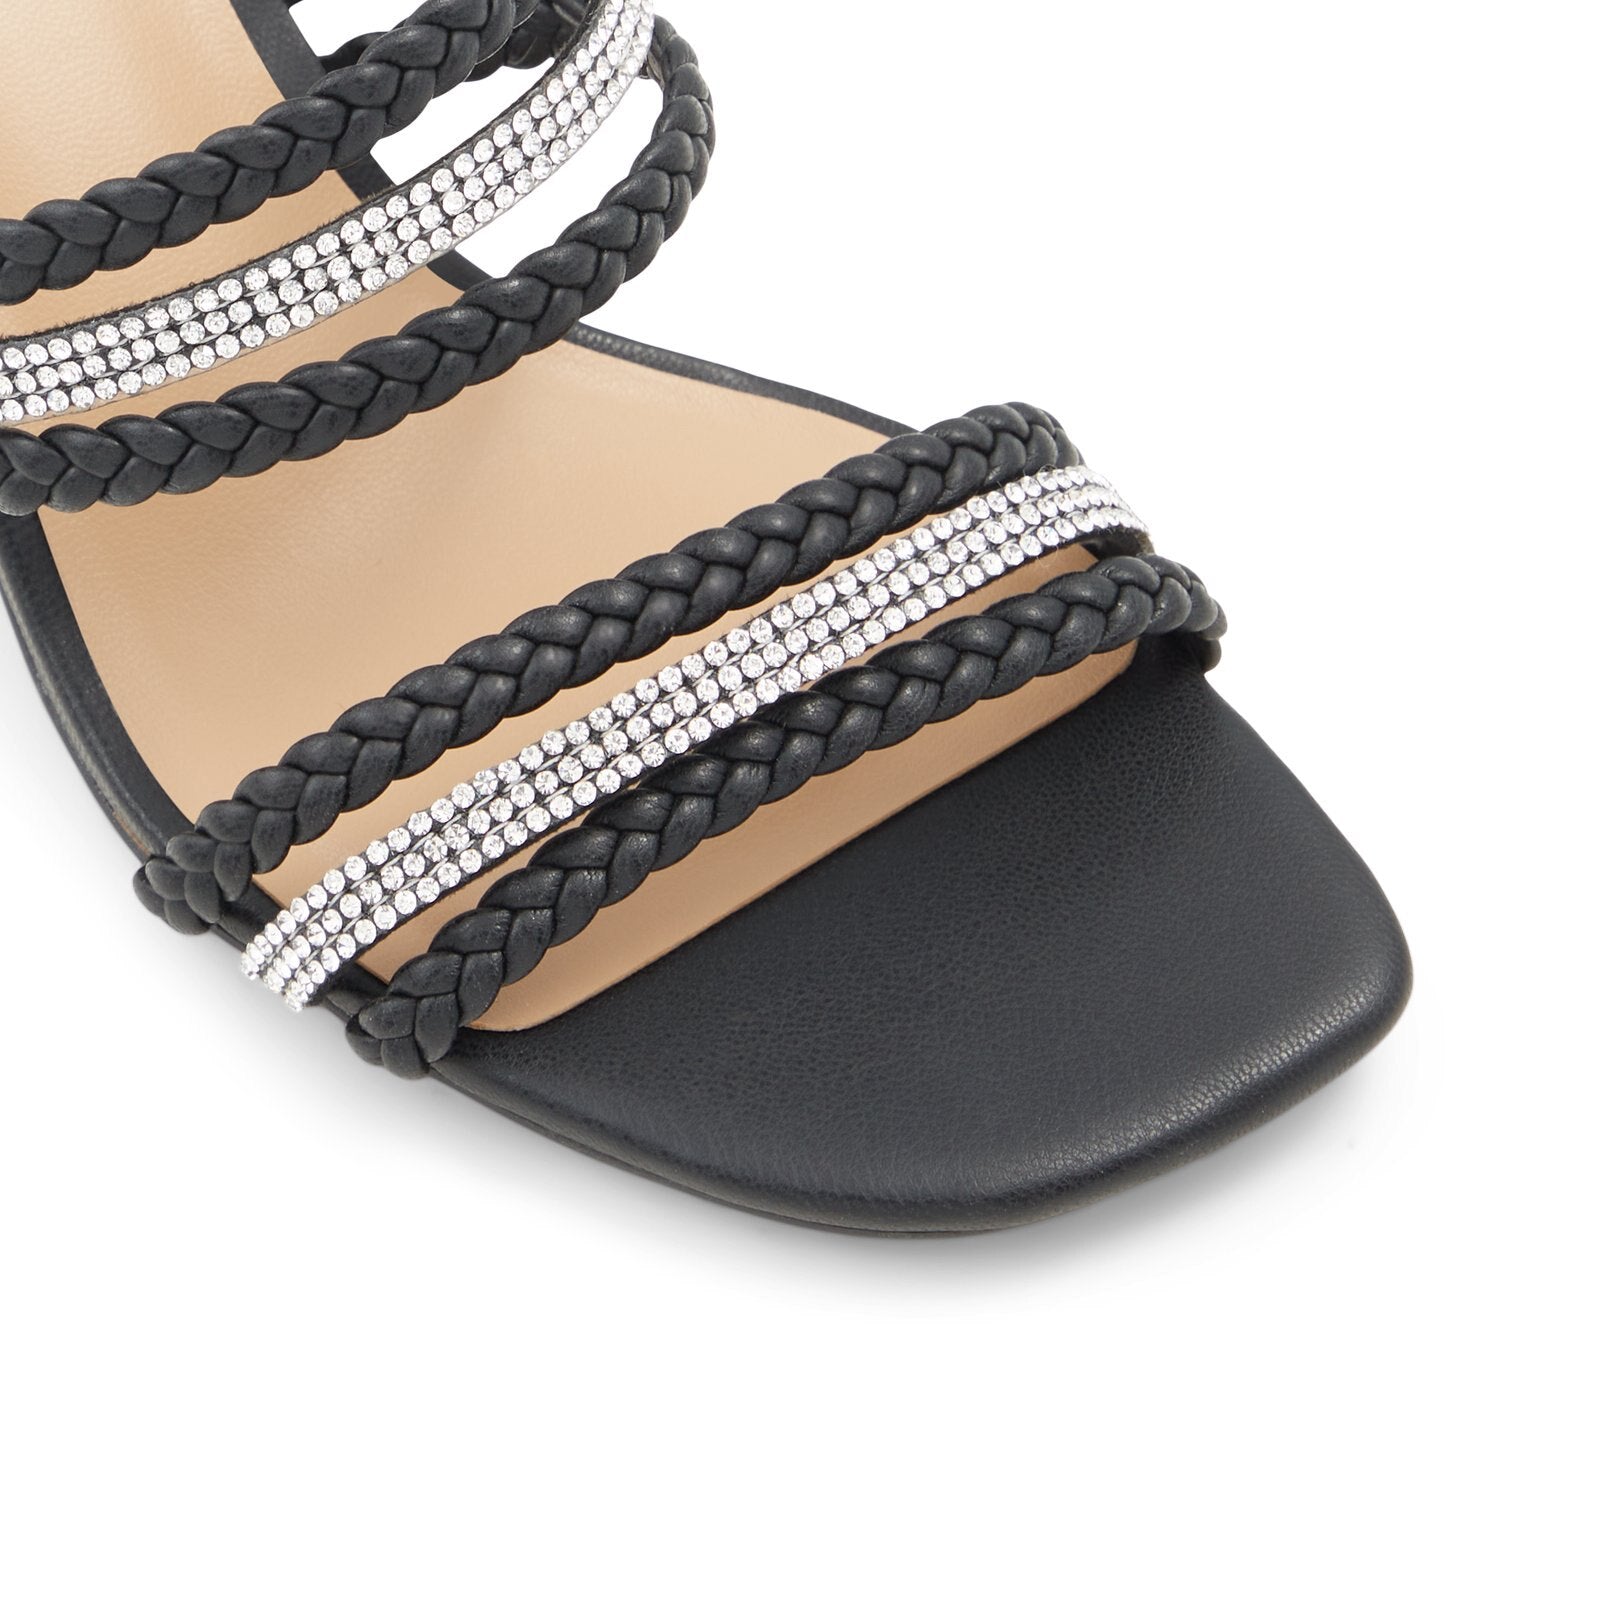 Jeraledia / Heeled Sandals Women Shoes - Black - CALL IT SPRING KSA